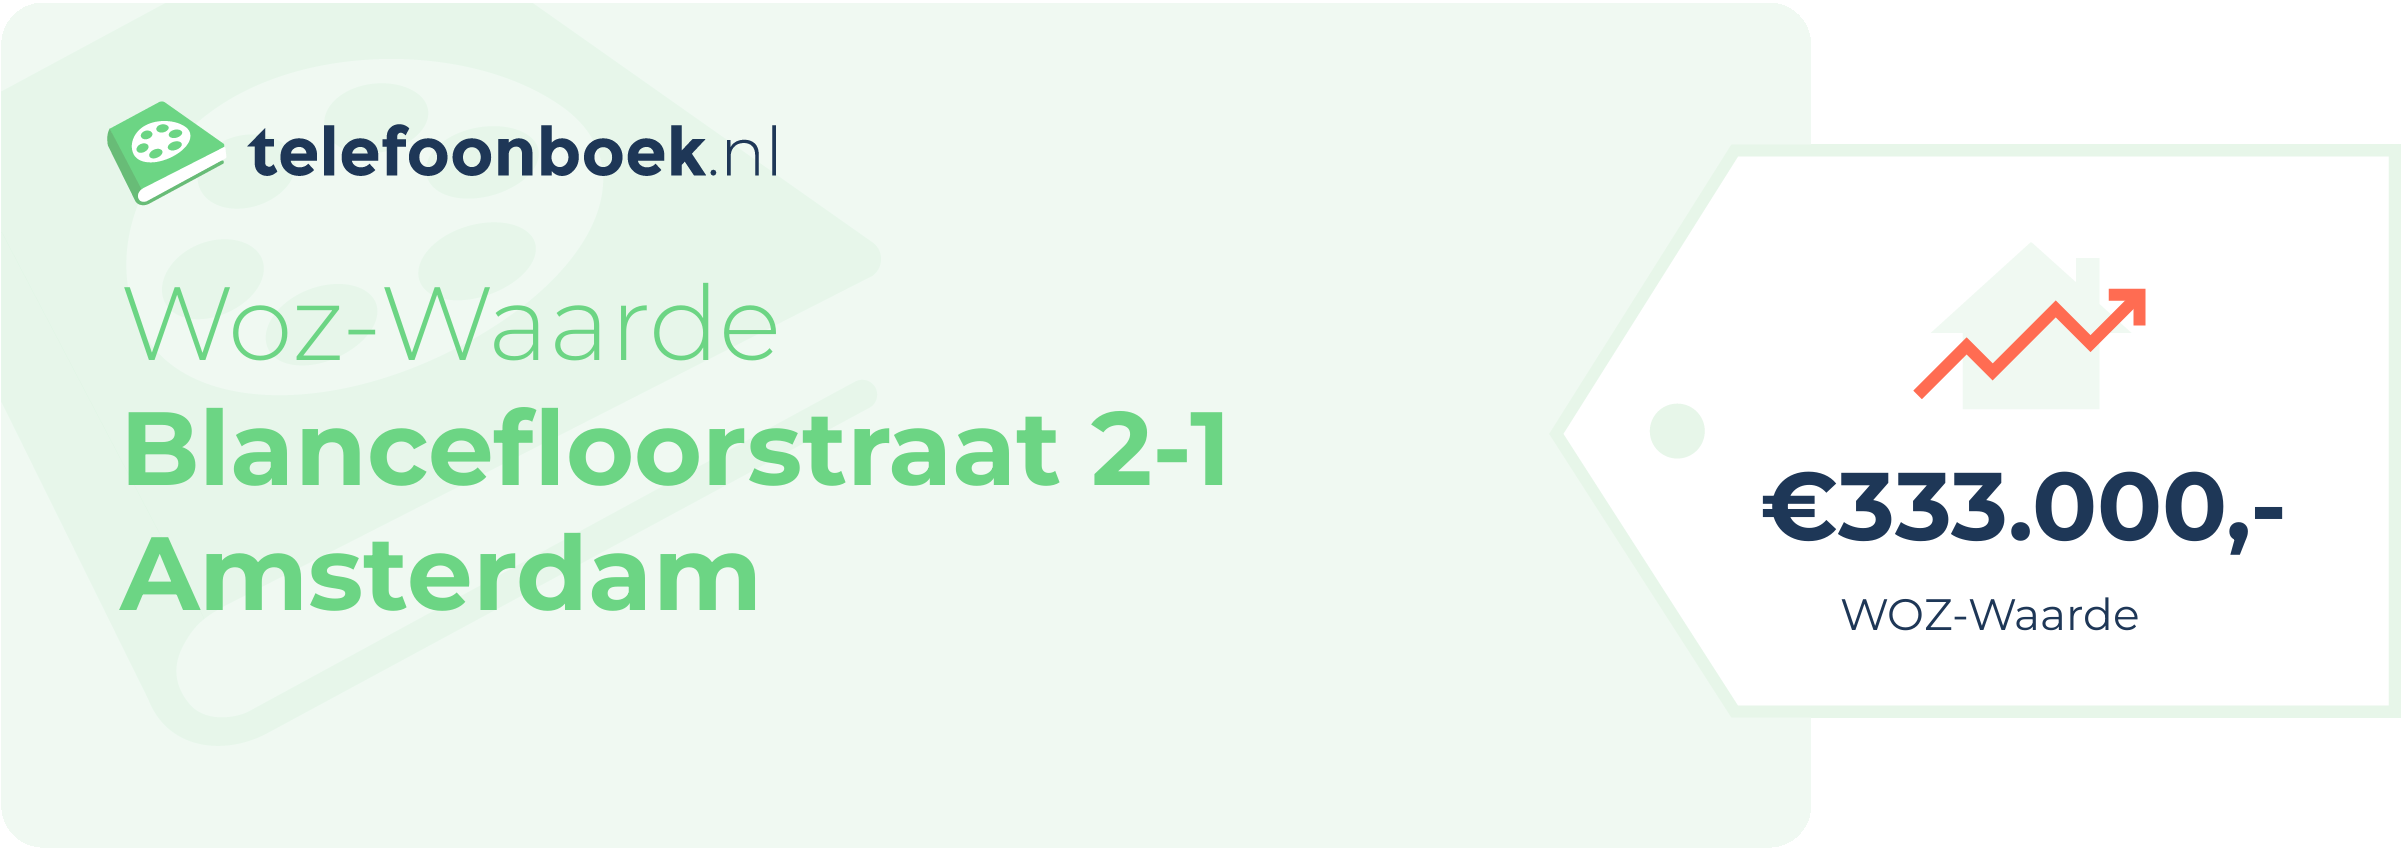 WOZ-waarde Blancefloorstraat 2-1 Amsterdam